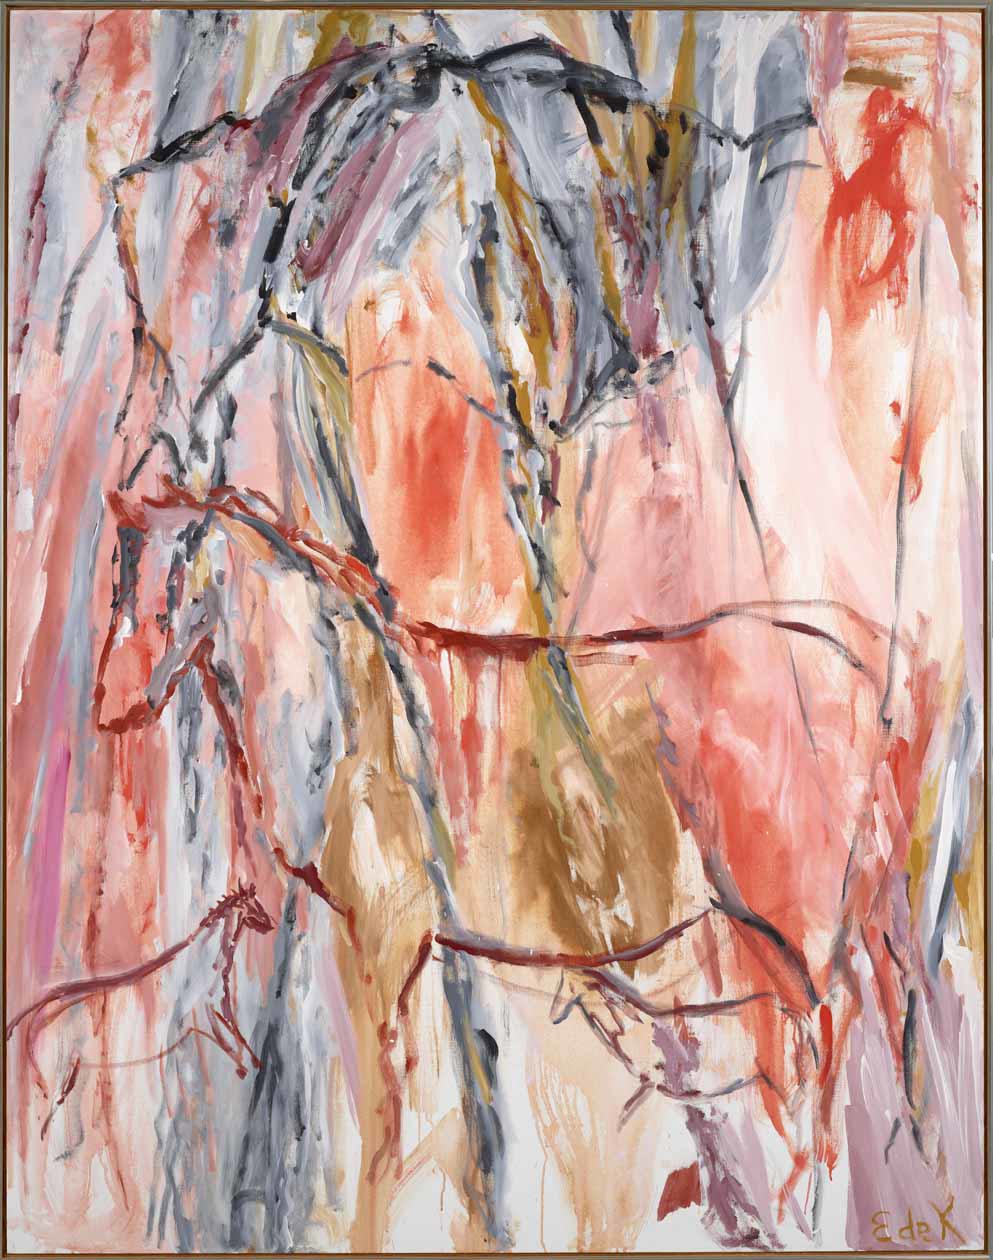 Elaine de Kooning, "Stalactite Wall", 1987